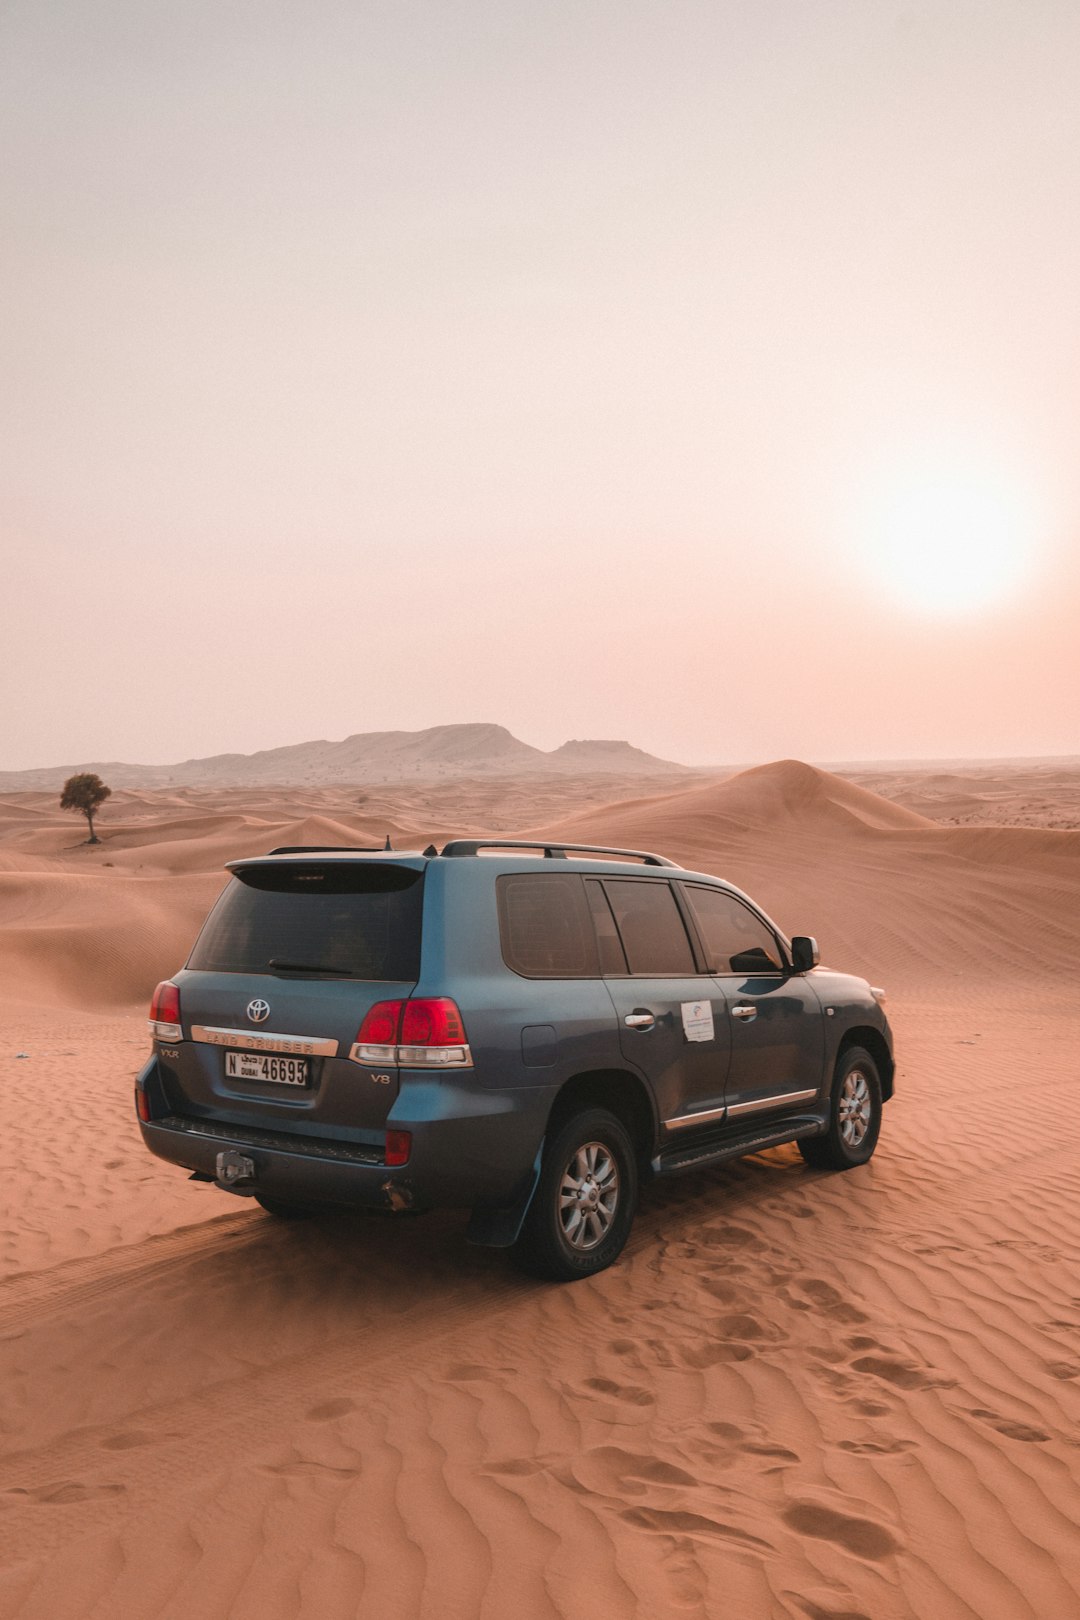 Desert photo spot Dubai - United Arab Emirates Al Madam